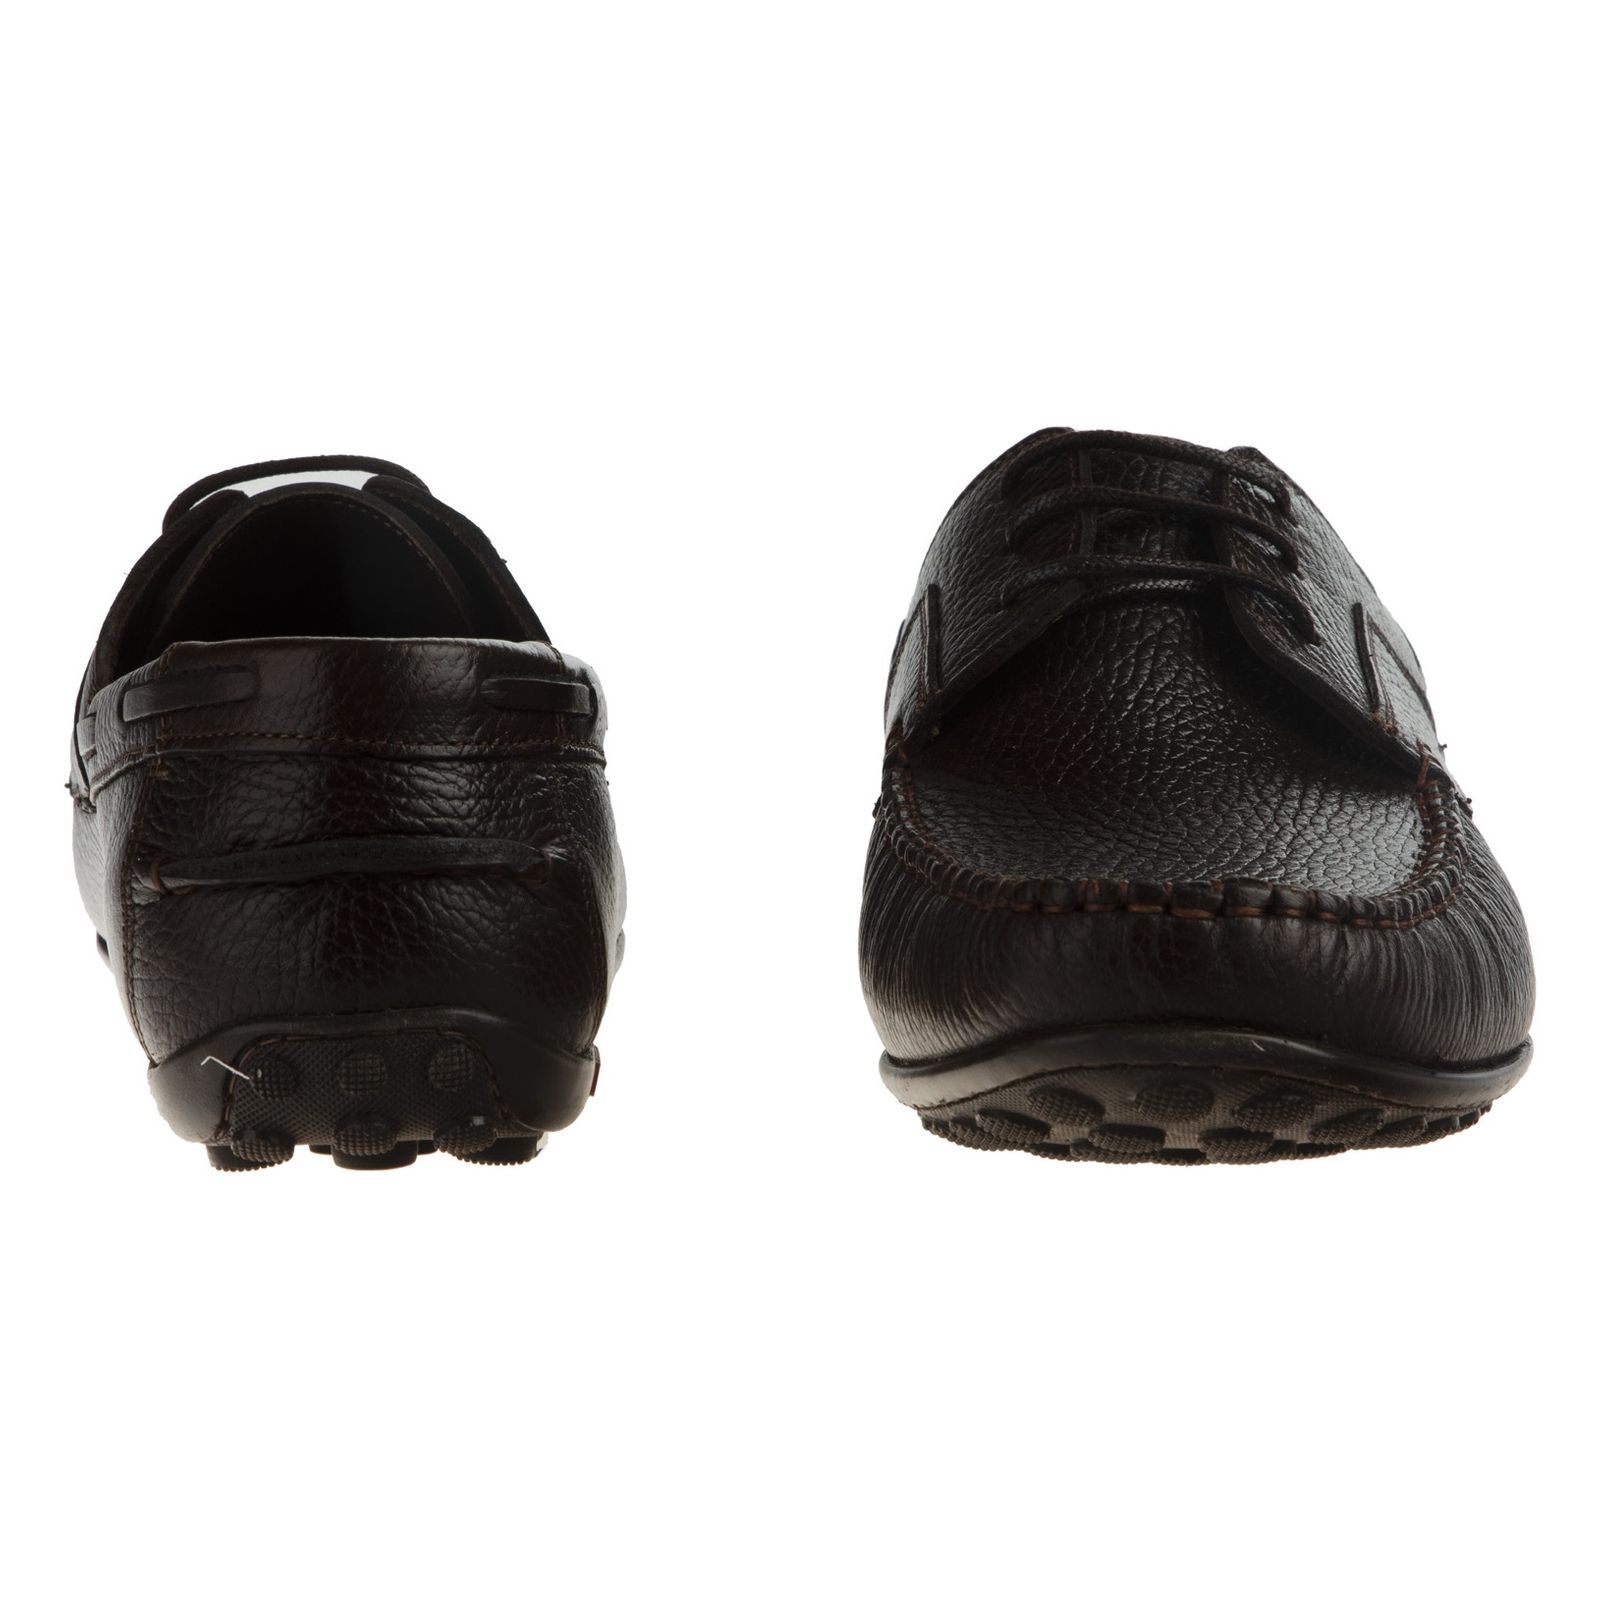 کفش روزمره مردانه بلوط مدل 7126A503-104 - قهوه ای - 5